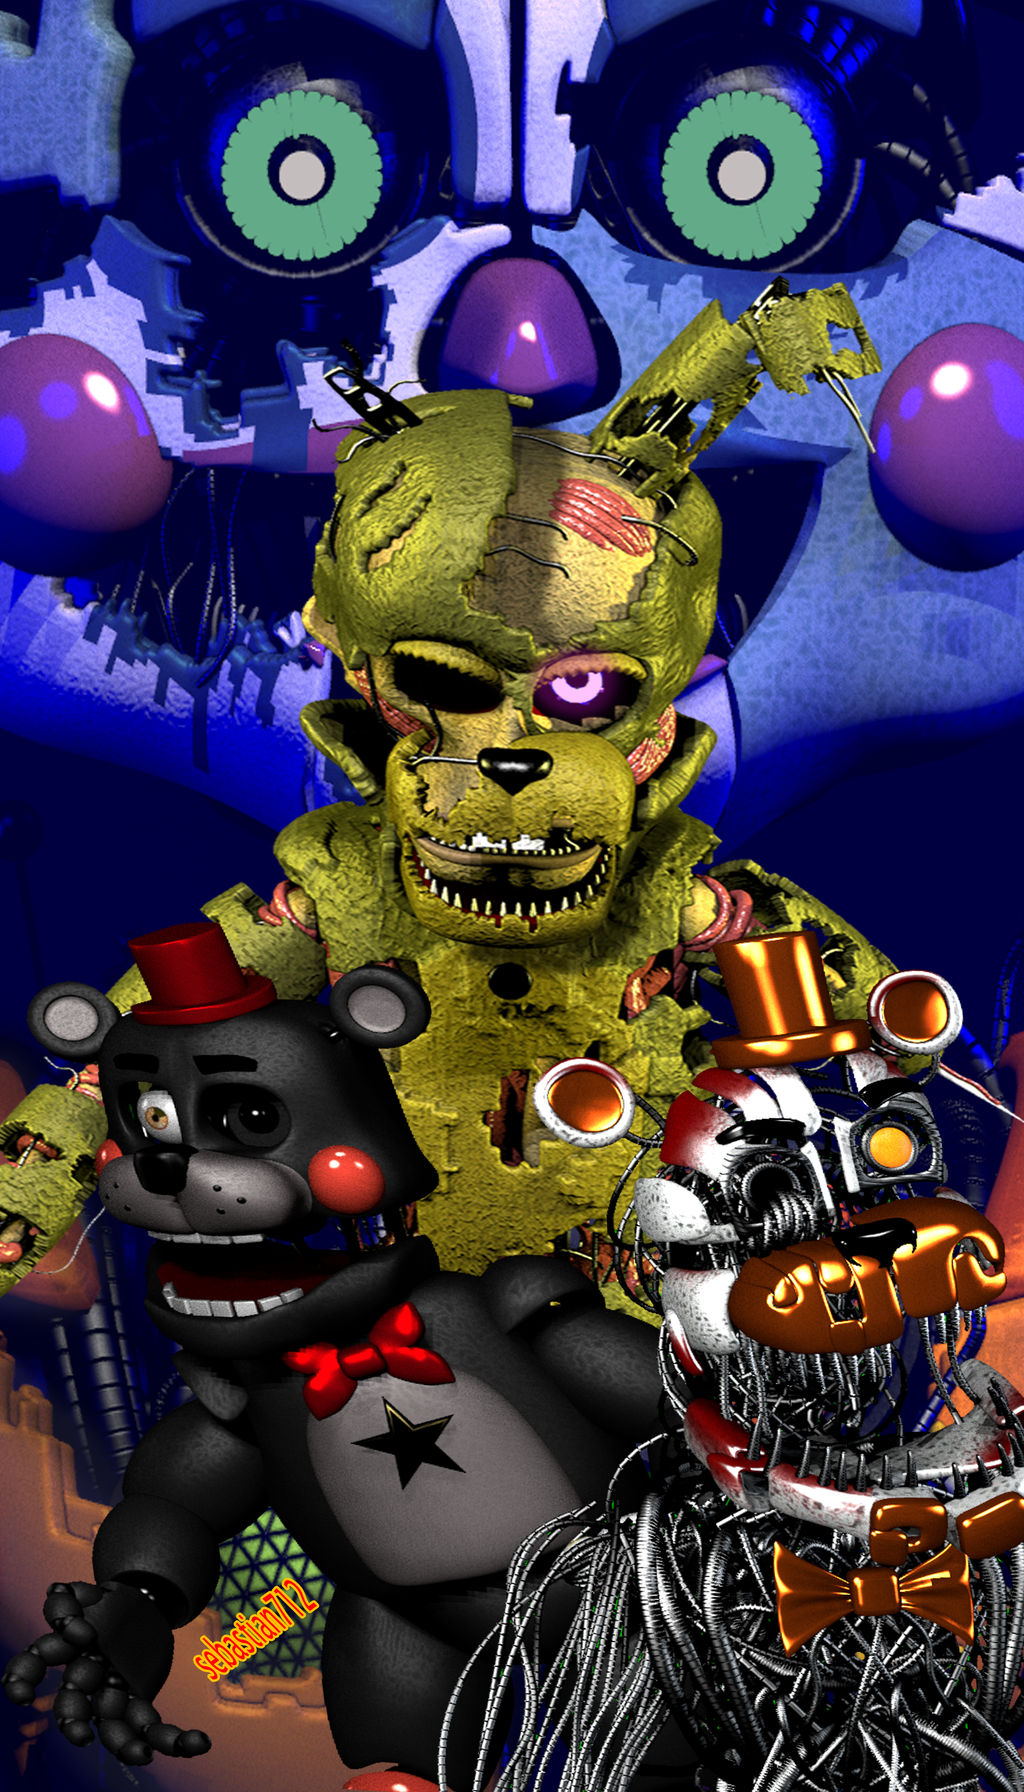 Five Nights at Freddy's 2 SCRATCH EDITION (By: Dogey_DB) at FNAF